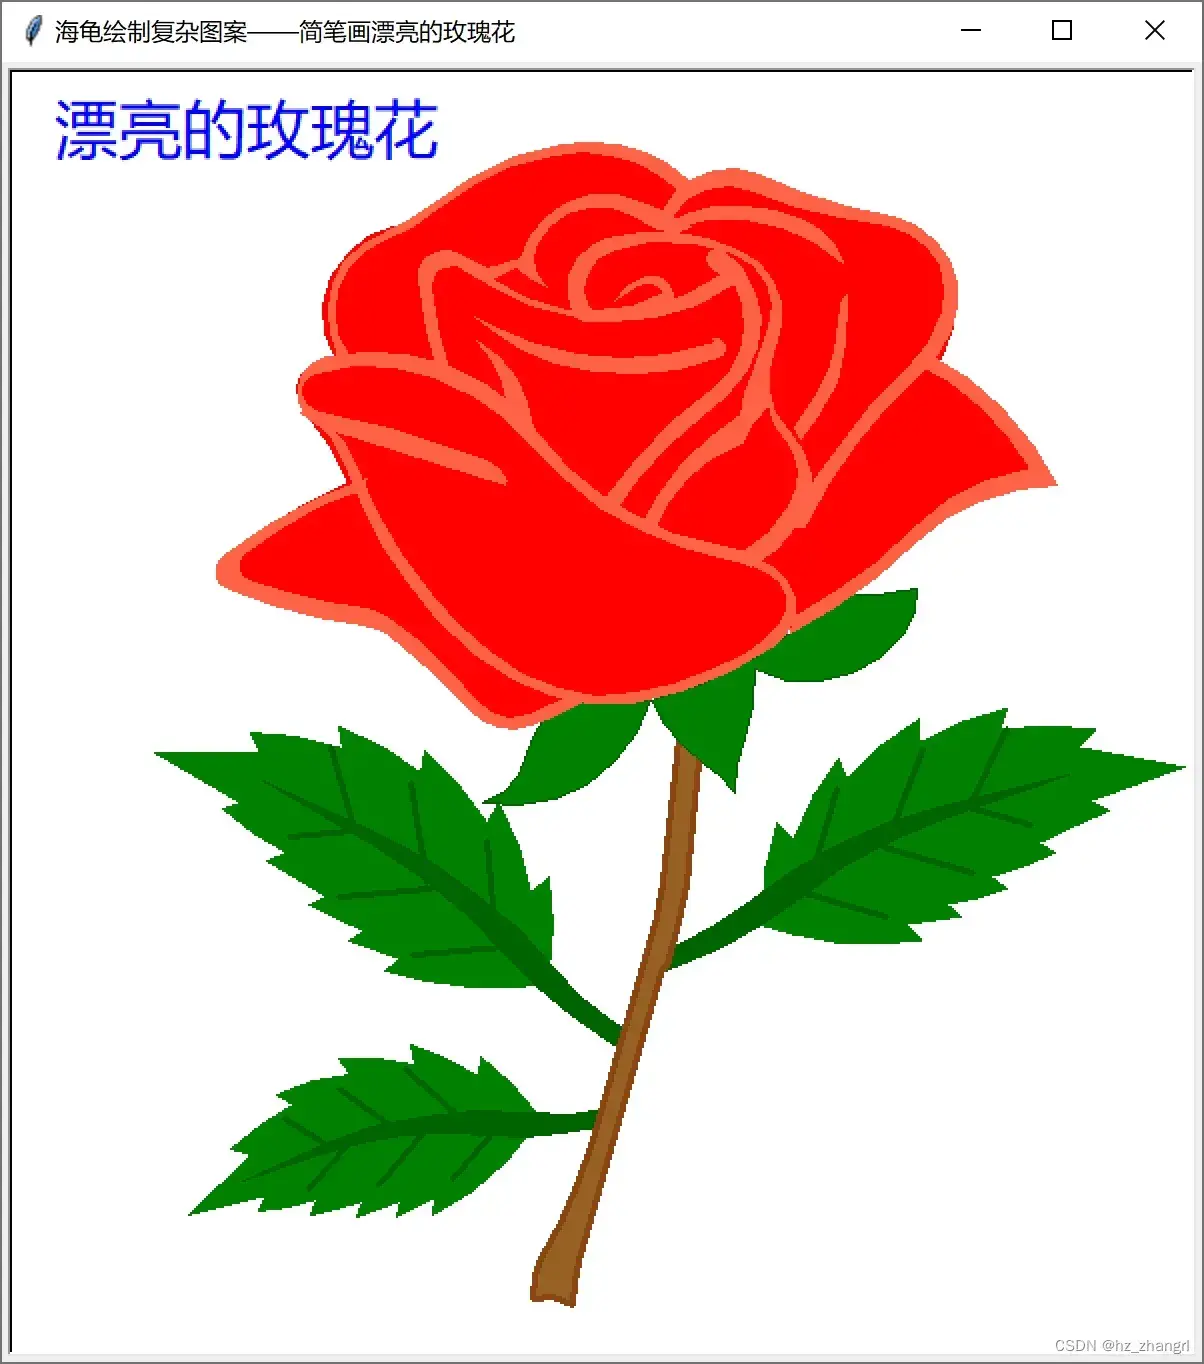 Python用turtle库绘制图形——漂亮的玫瑰